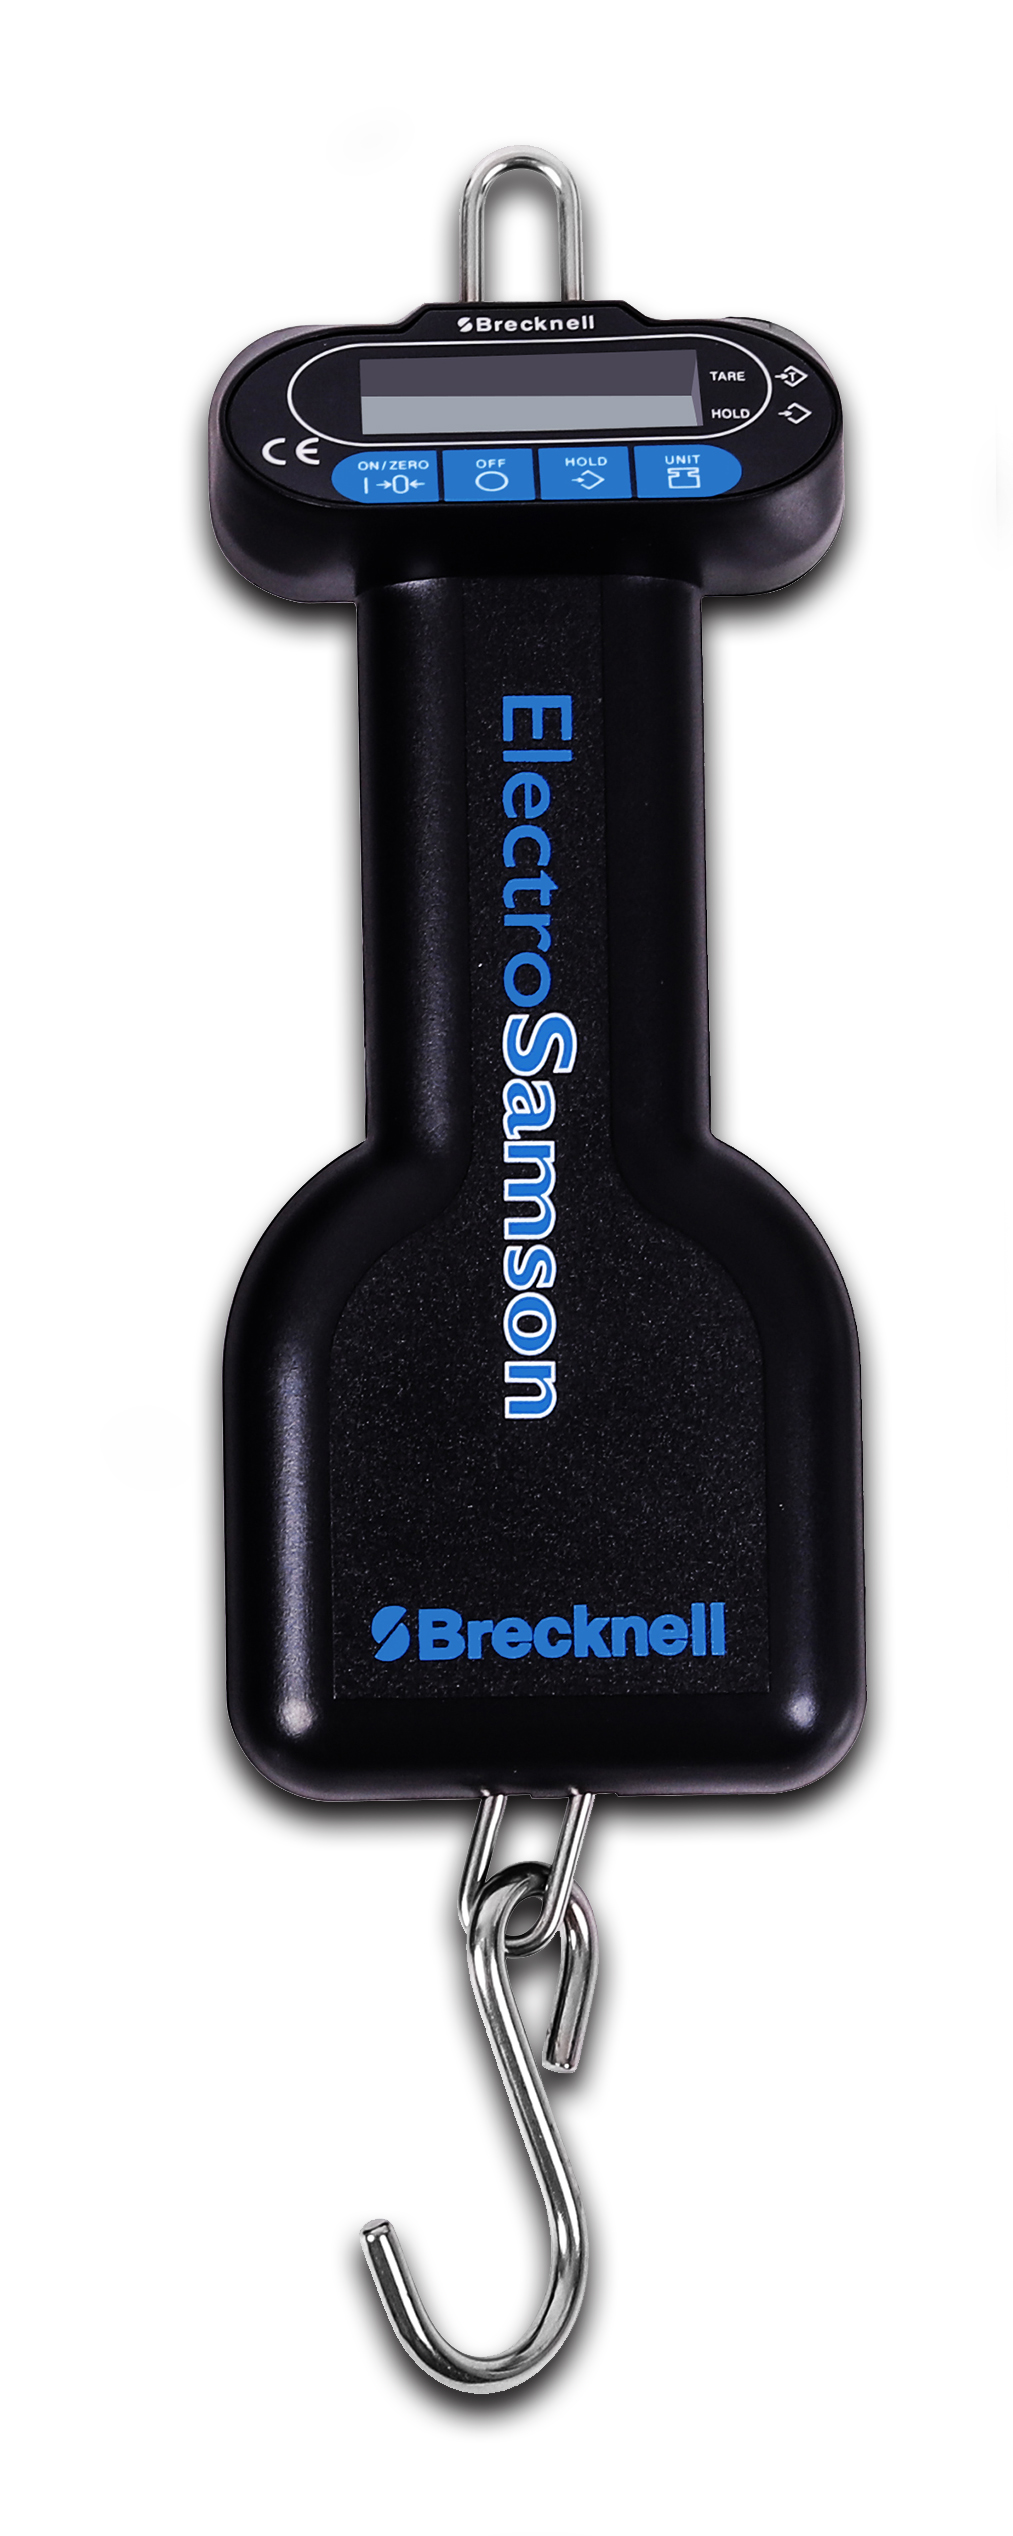 Brecknell ElectroSamson Hand Held Digital Scale, 99 lb x 0.1 lb